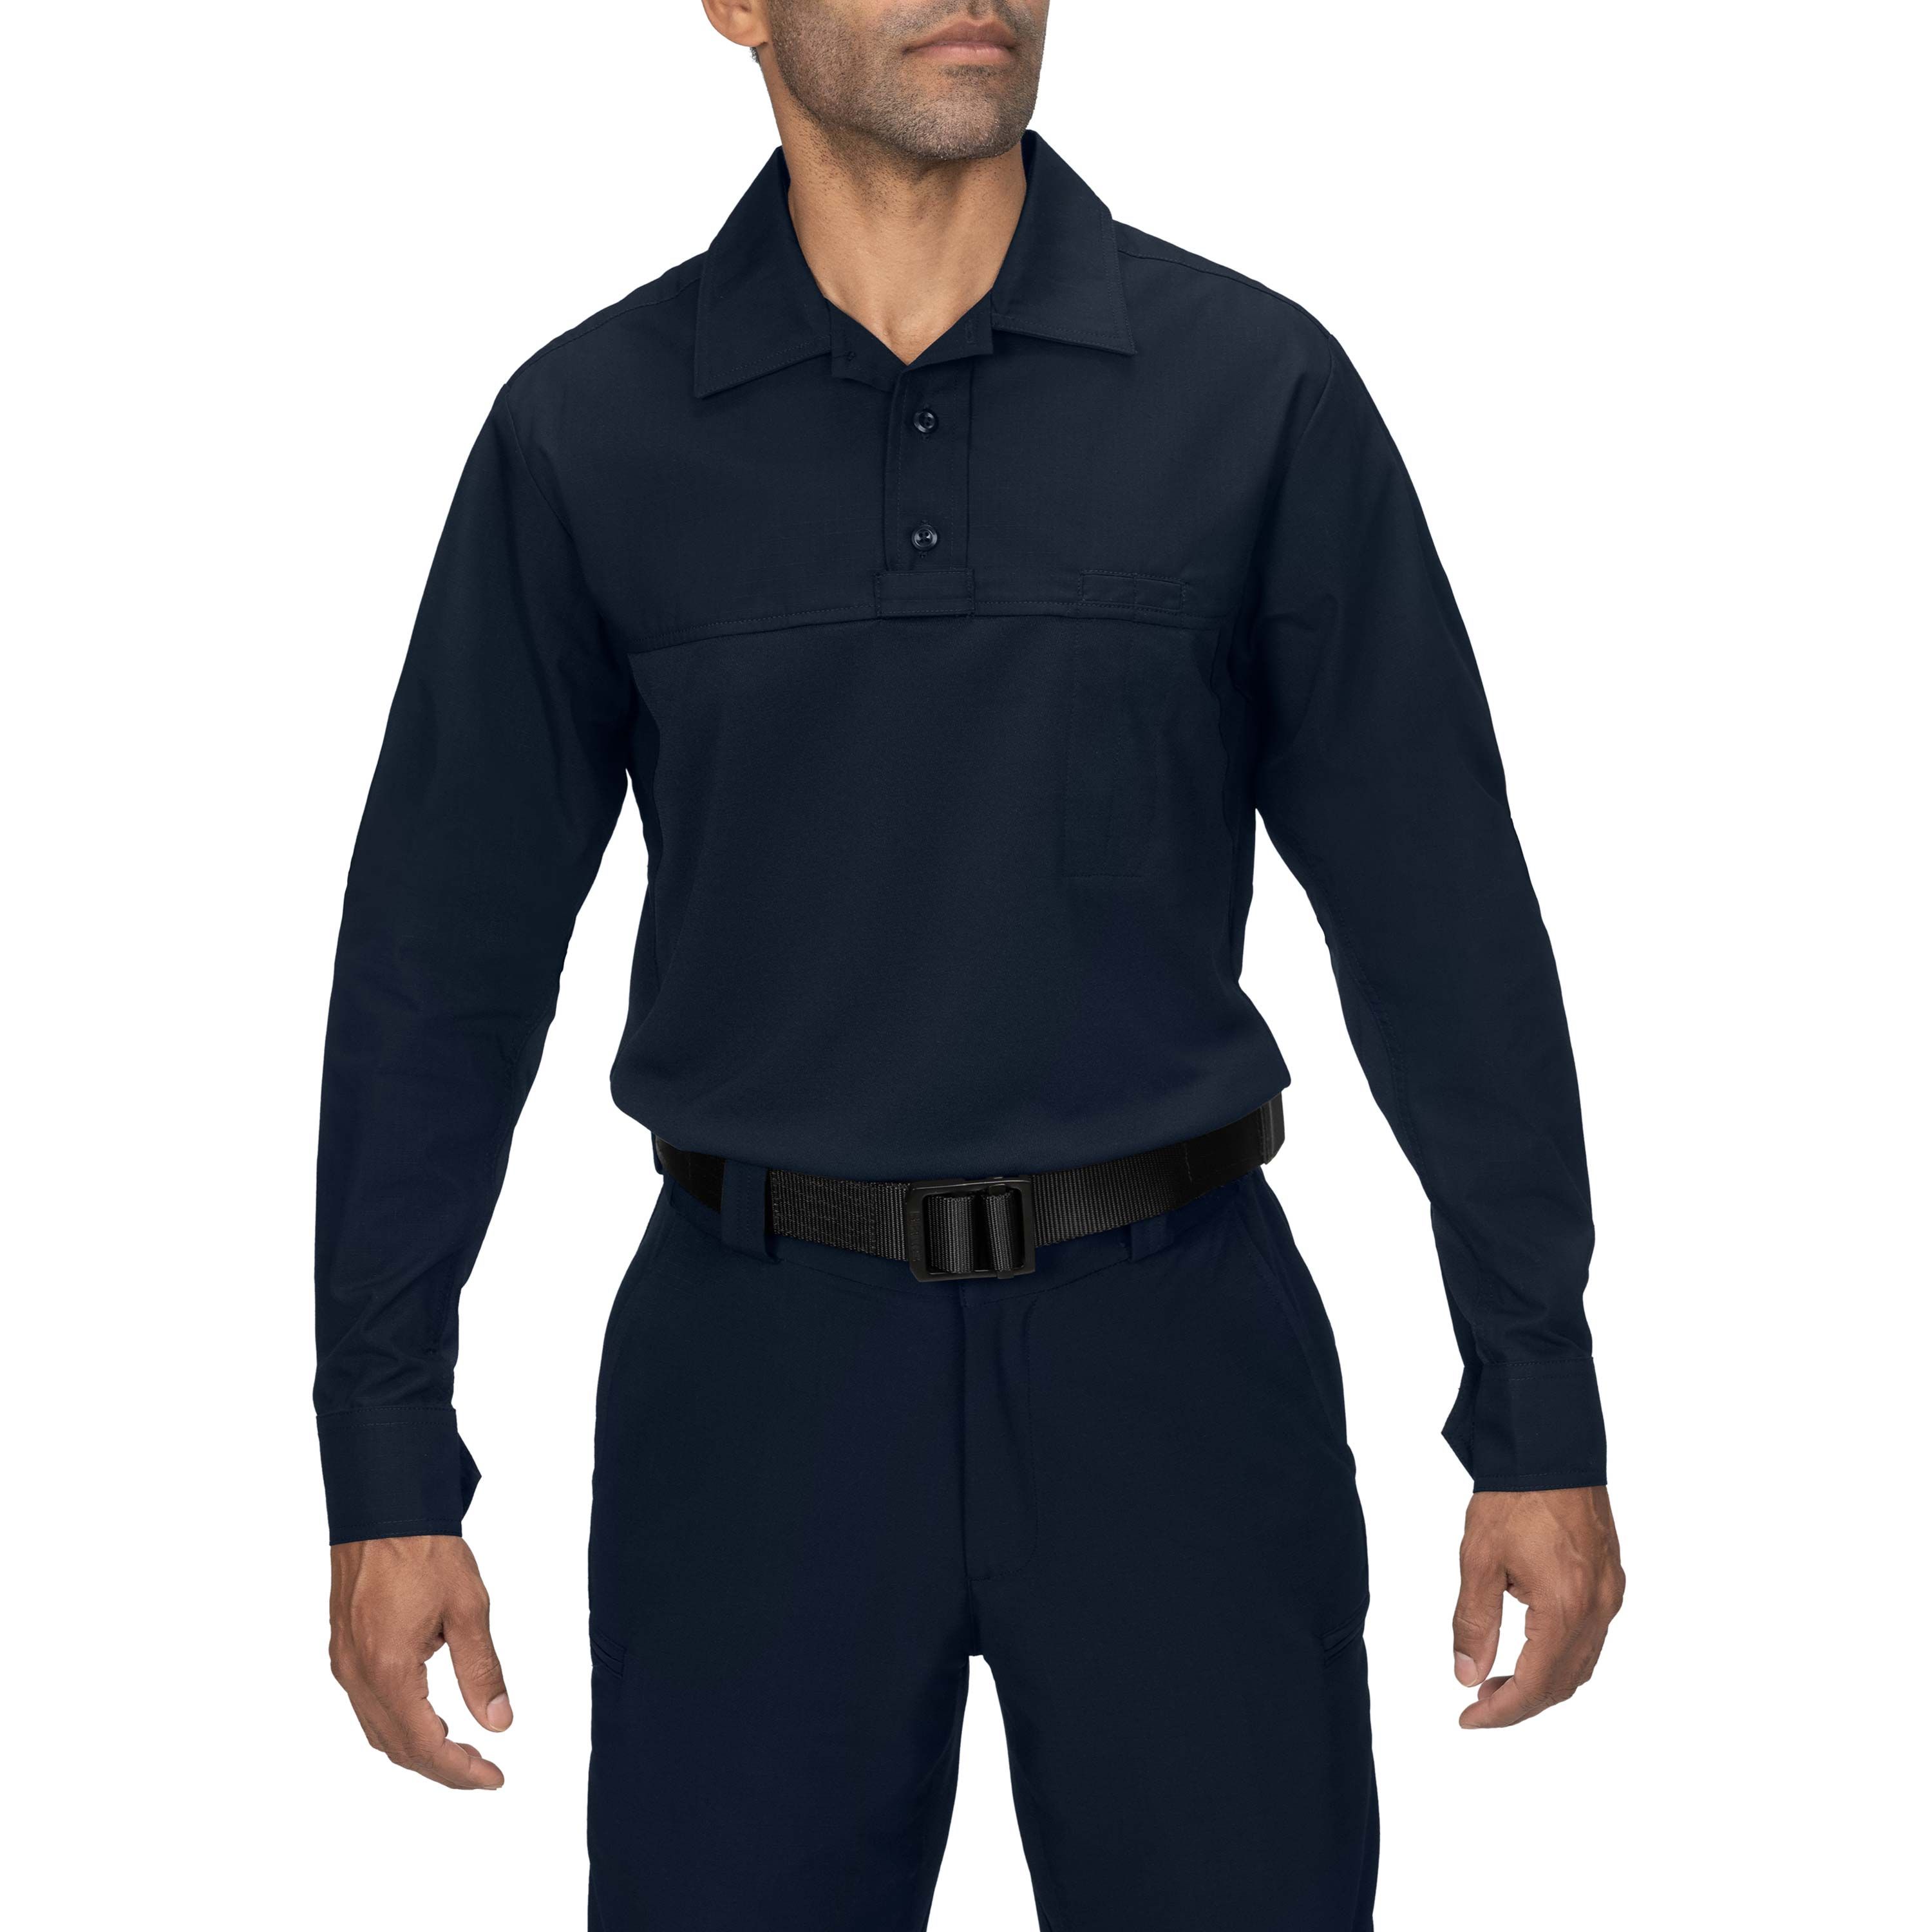 Blauer - Sleeve Long Shirt Long Sleeve - ArmorSkin Shirt 8781 Base Base - Tactical